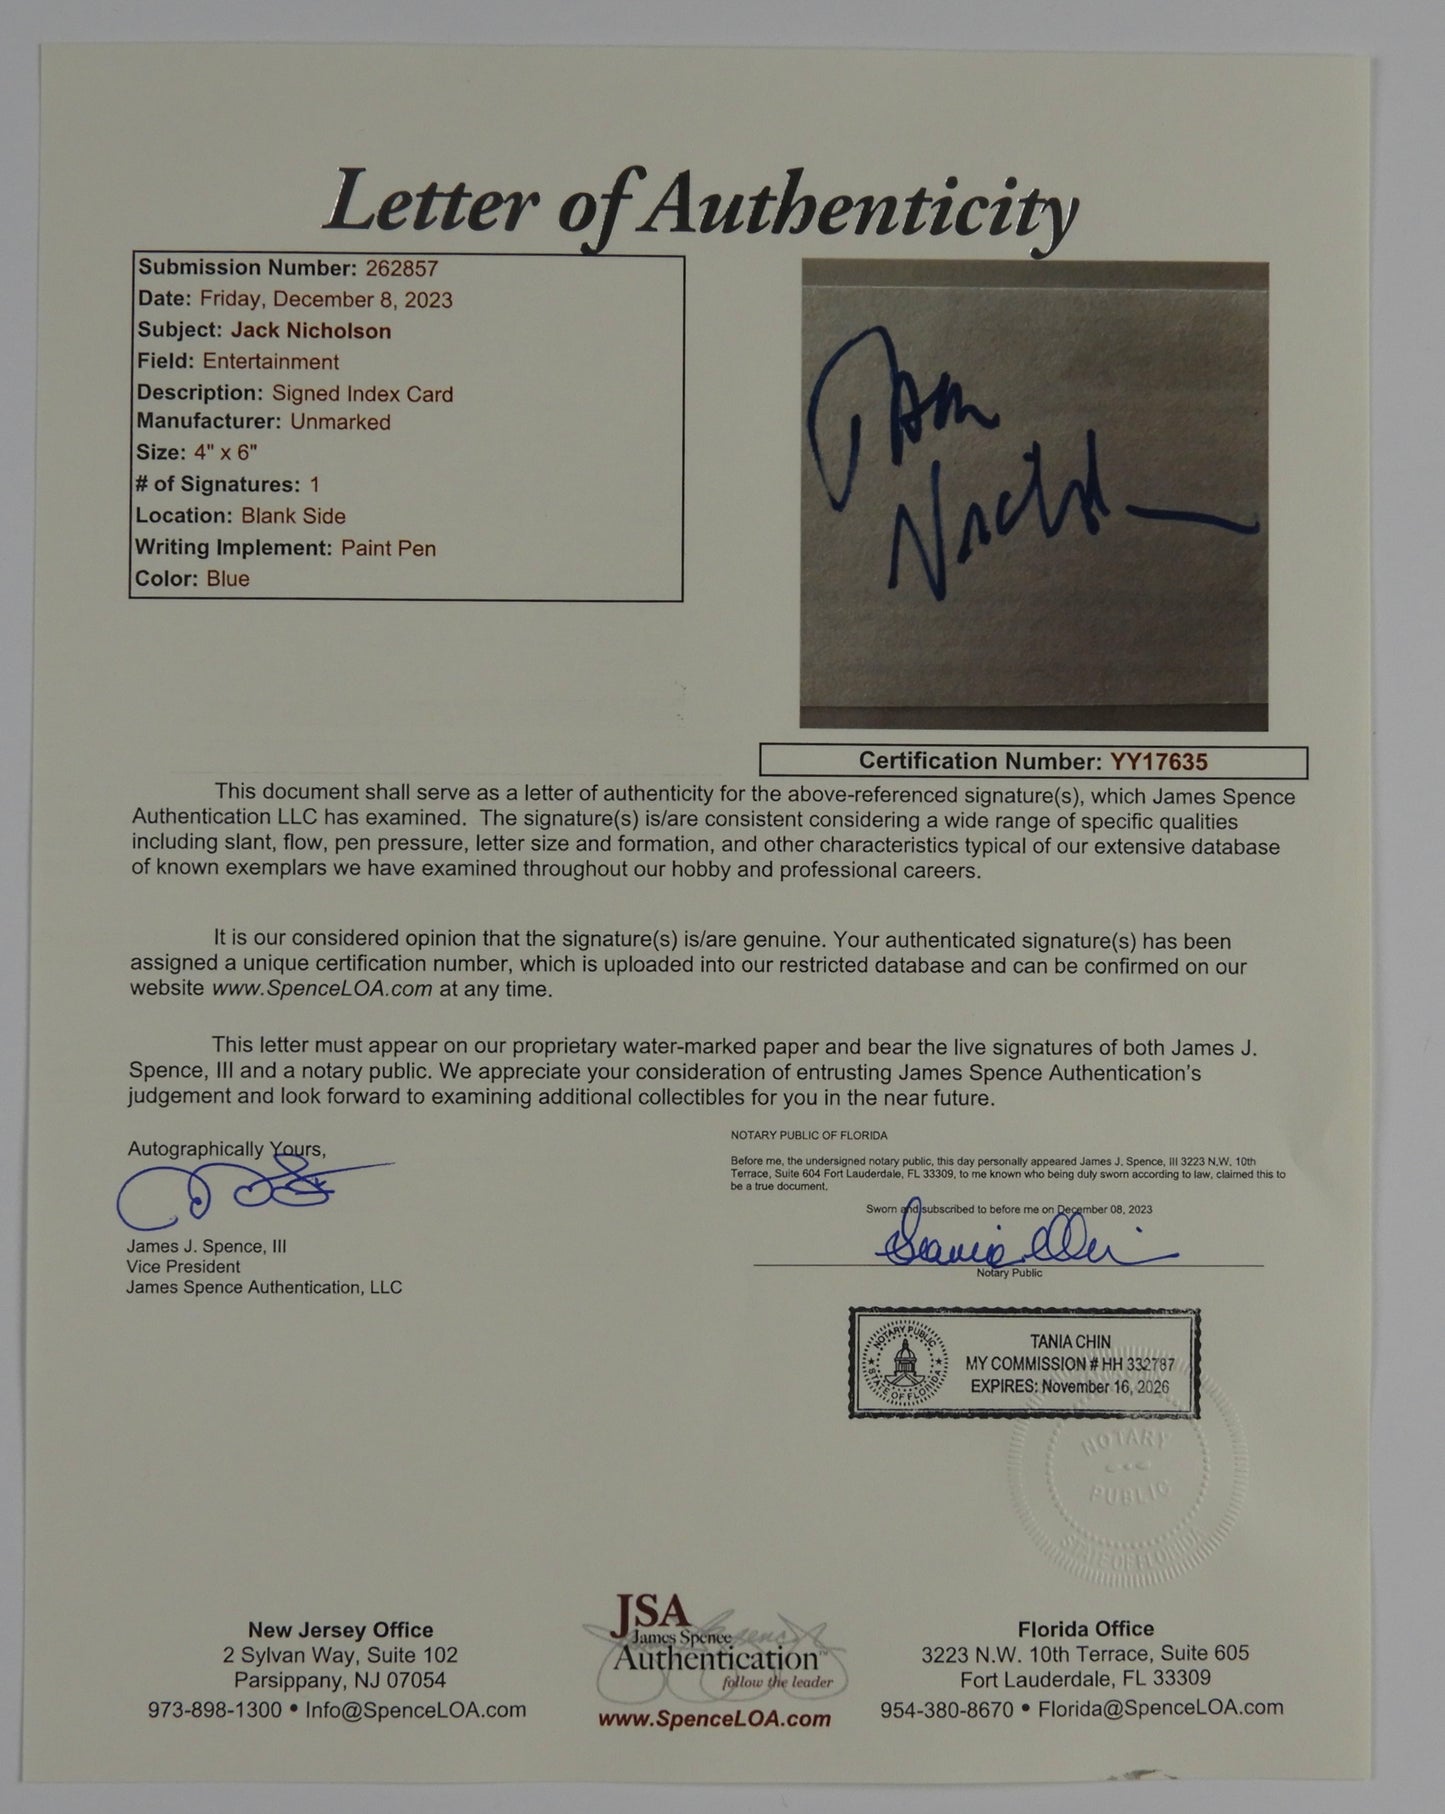 Jack Nicholson Batman The Joker JSA Autograph Signed Index Card 4 x 6